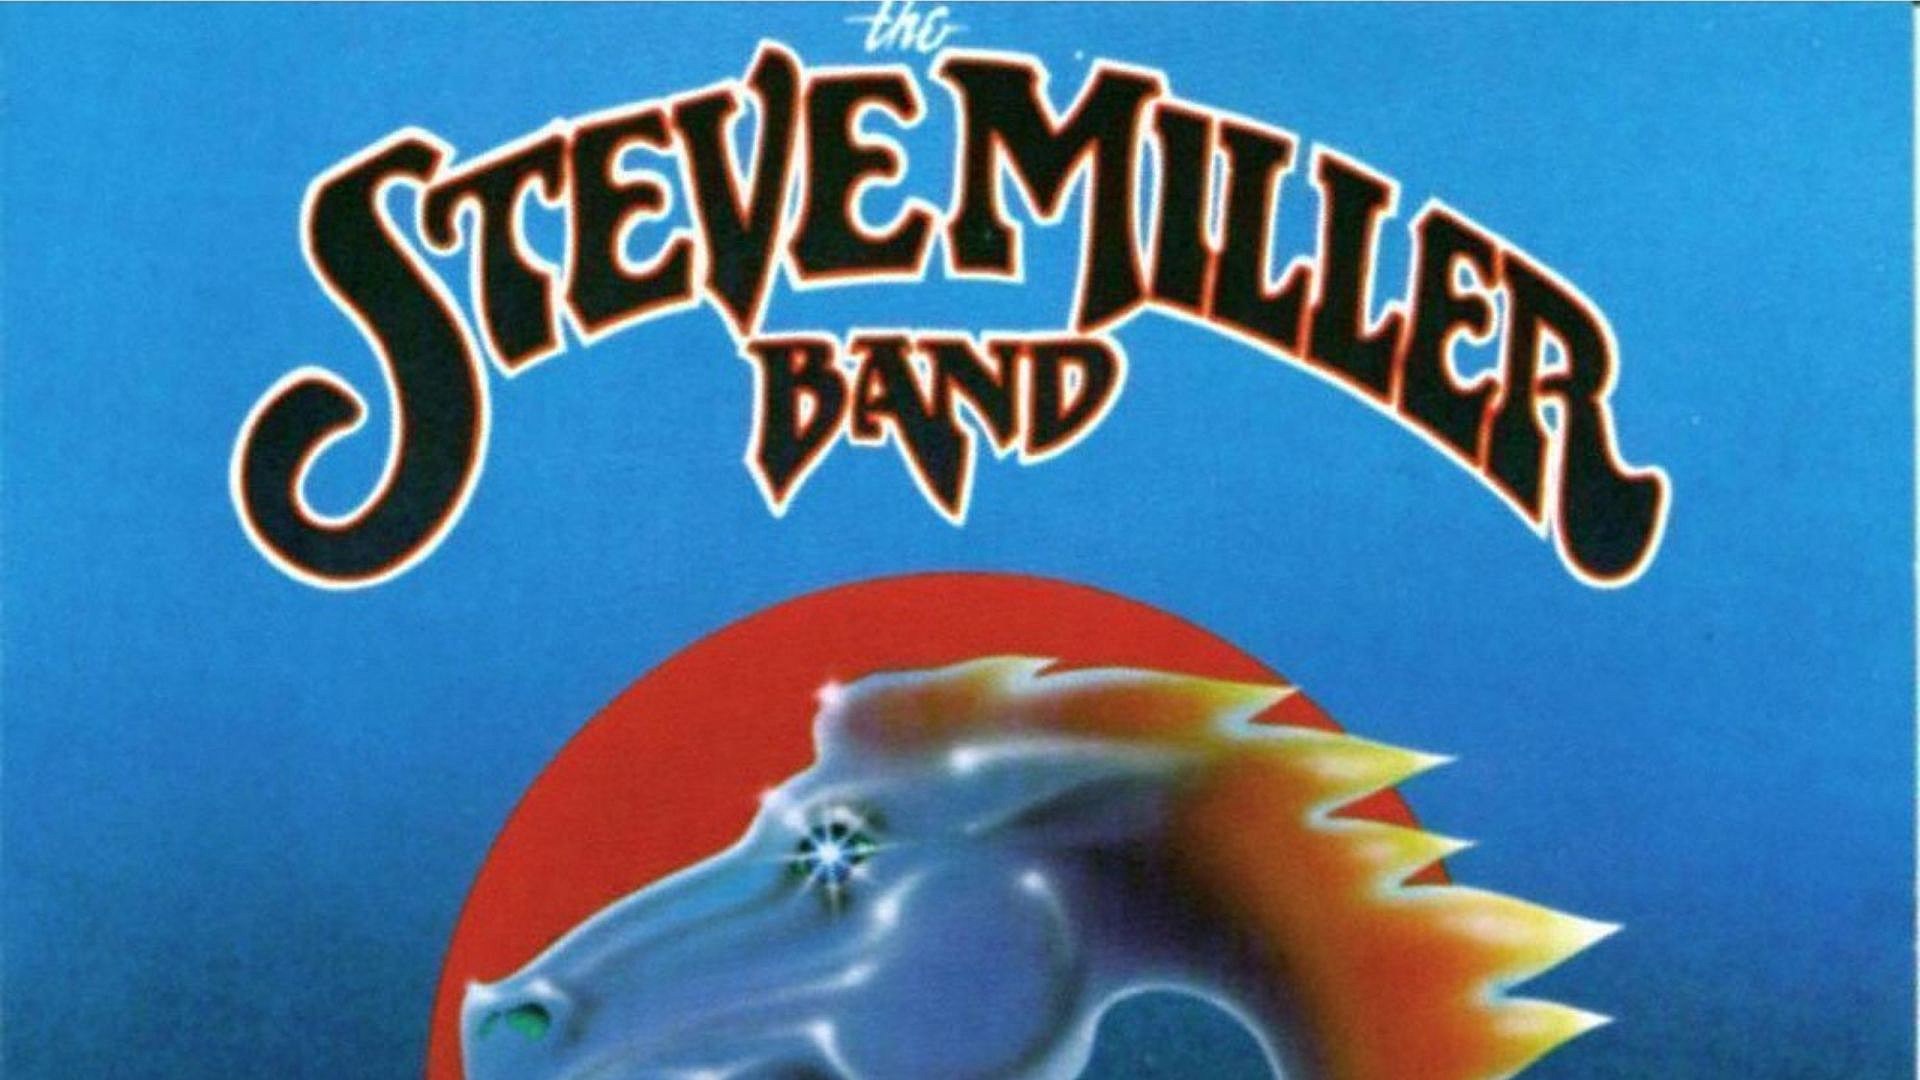 The Hidden Image in Steve Miller Band's Album Cover